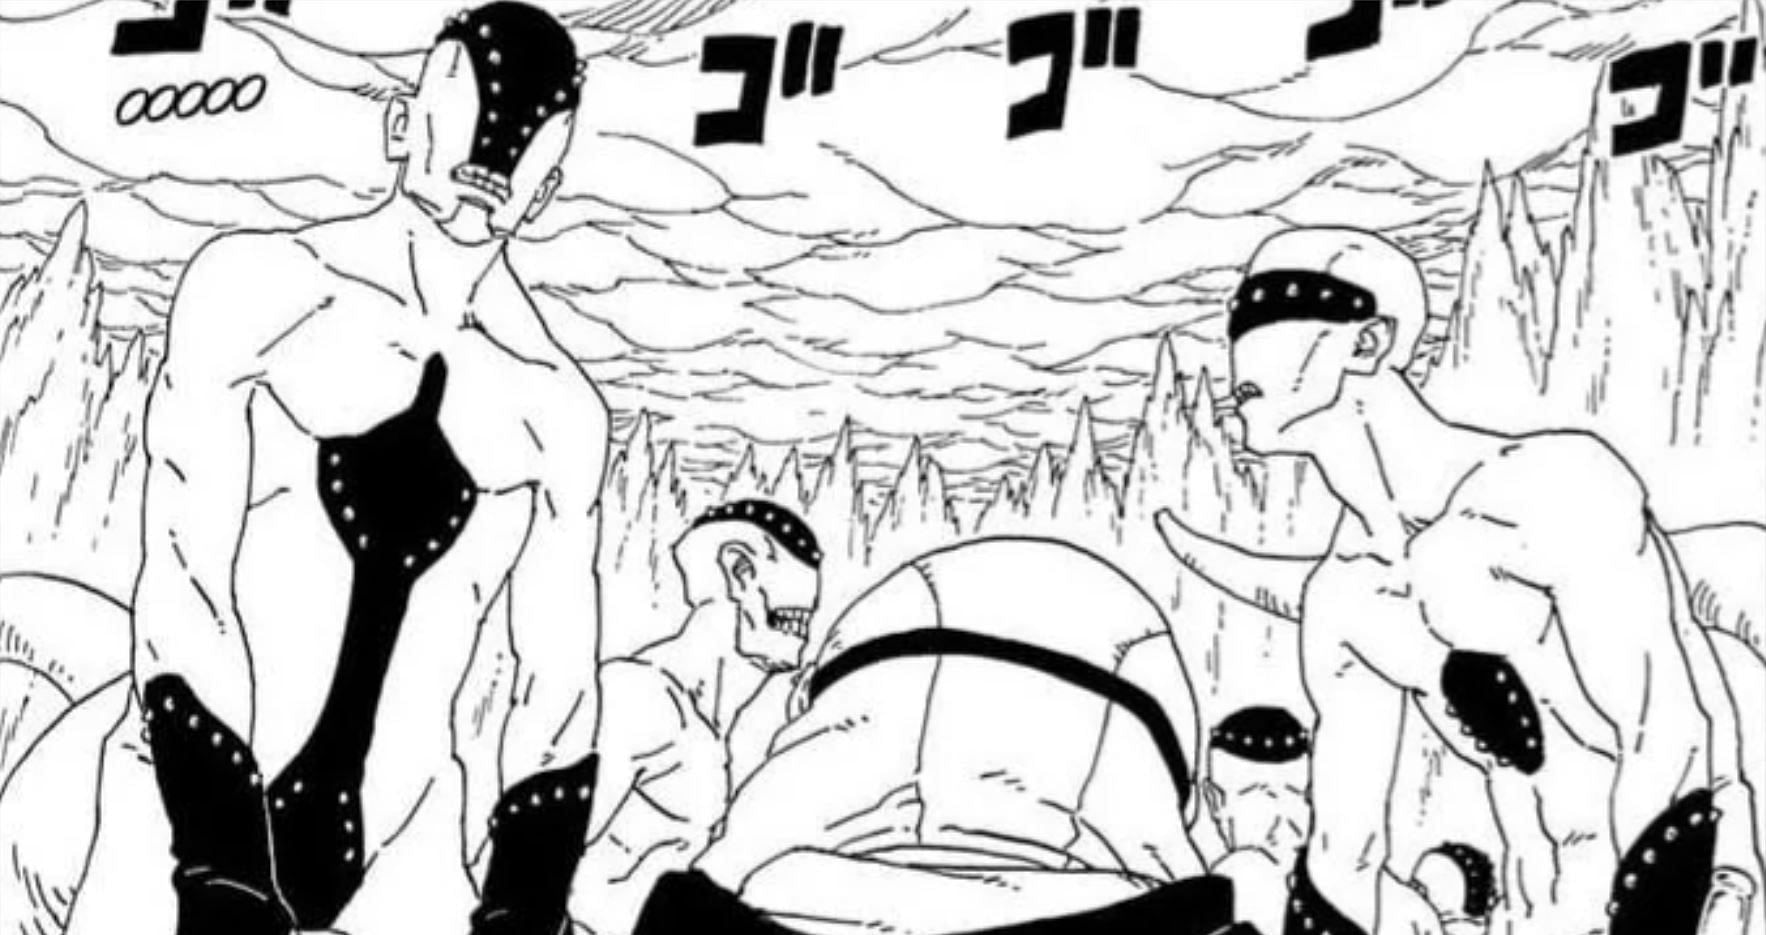 Claw Grime army as seen in Boruto manga (Image via Shueisha)